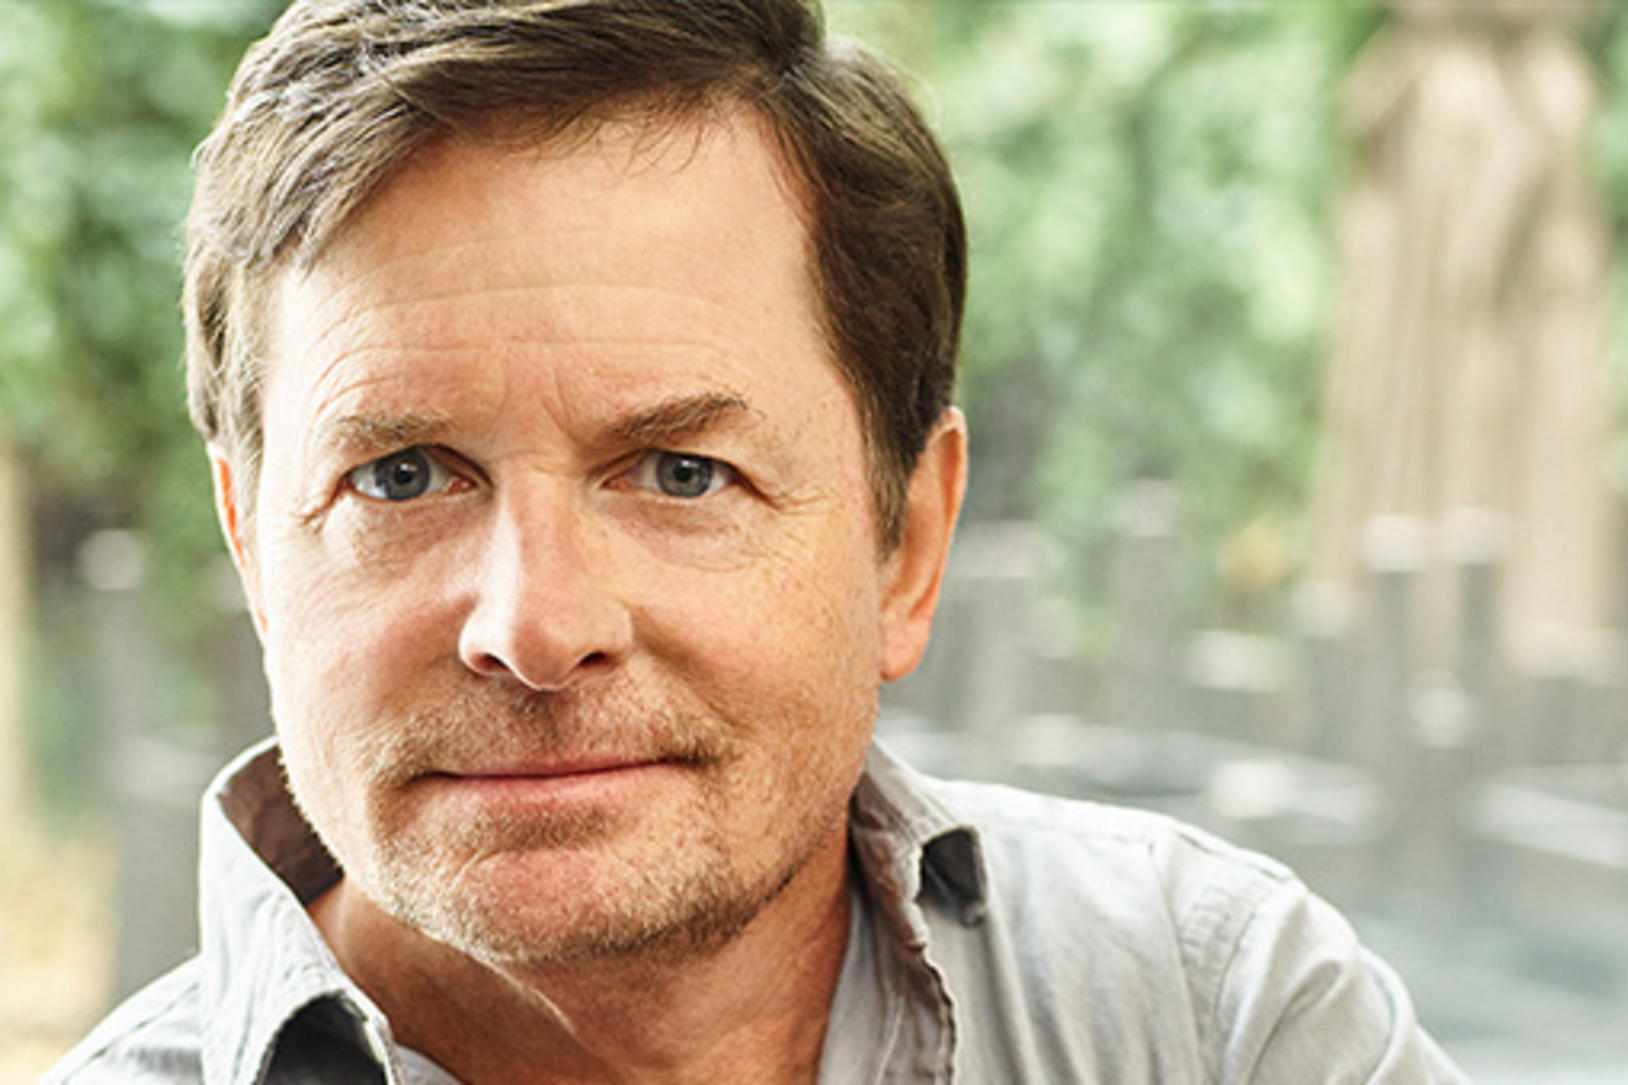 Michael J Fox On Living With Parkinsons To Me Hope Is Informed Optimism Parkinsons Disease 